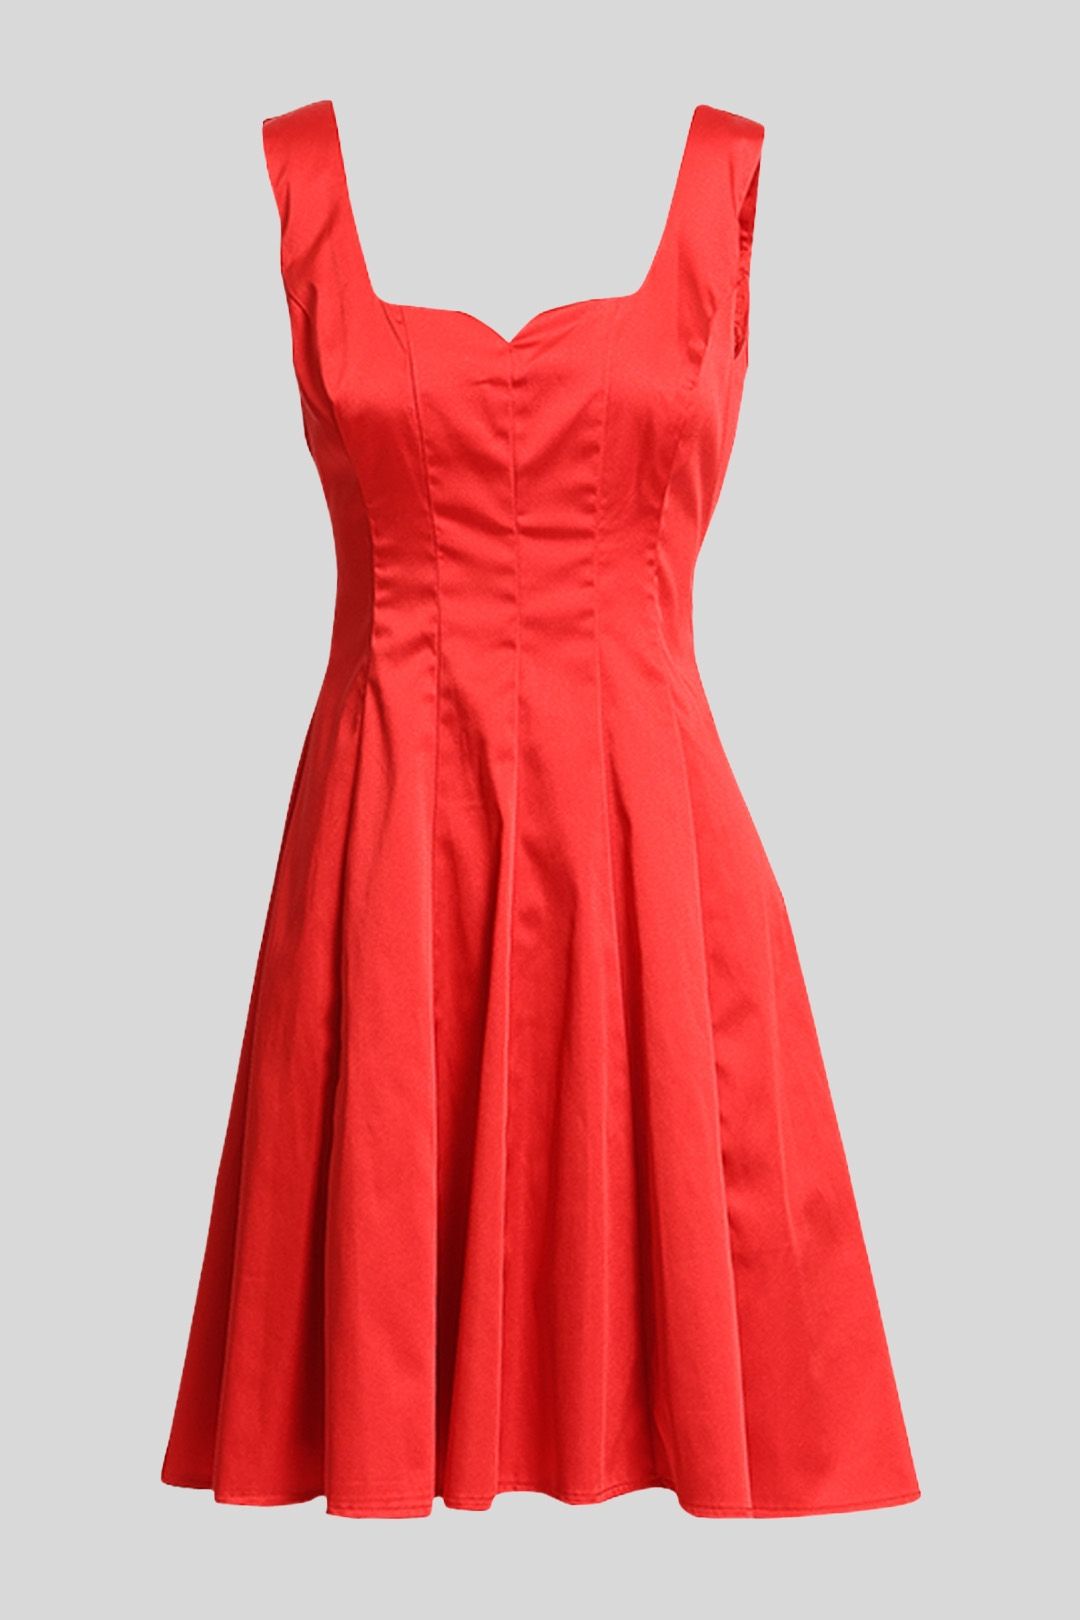 Review - Red Satin Mini Dress